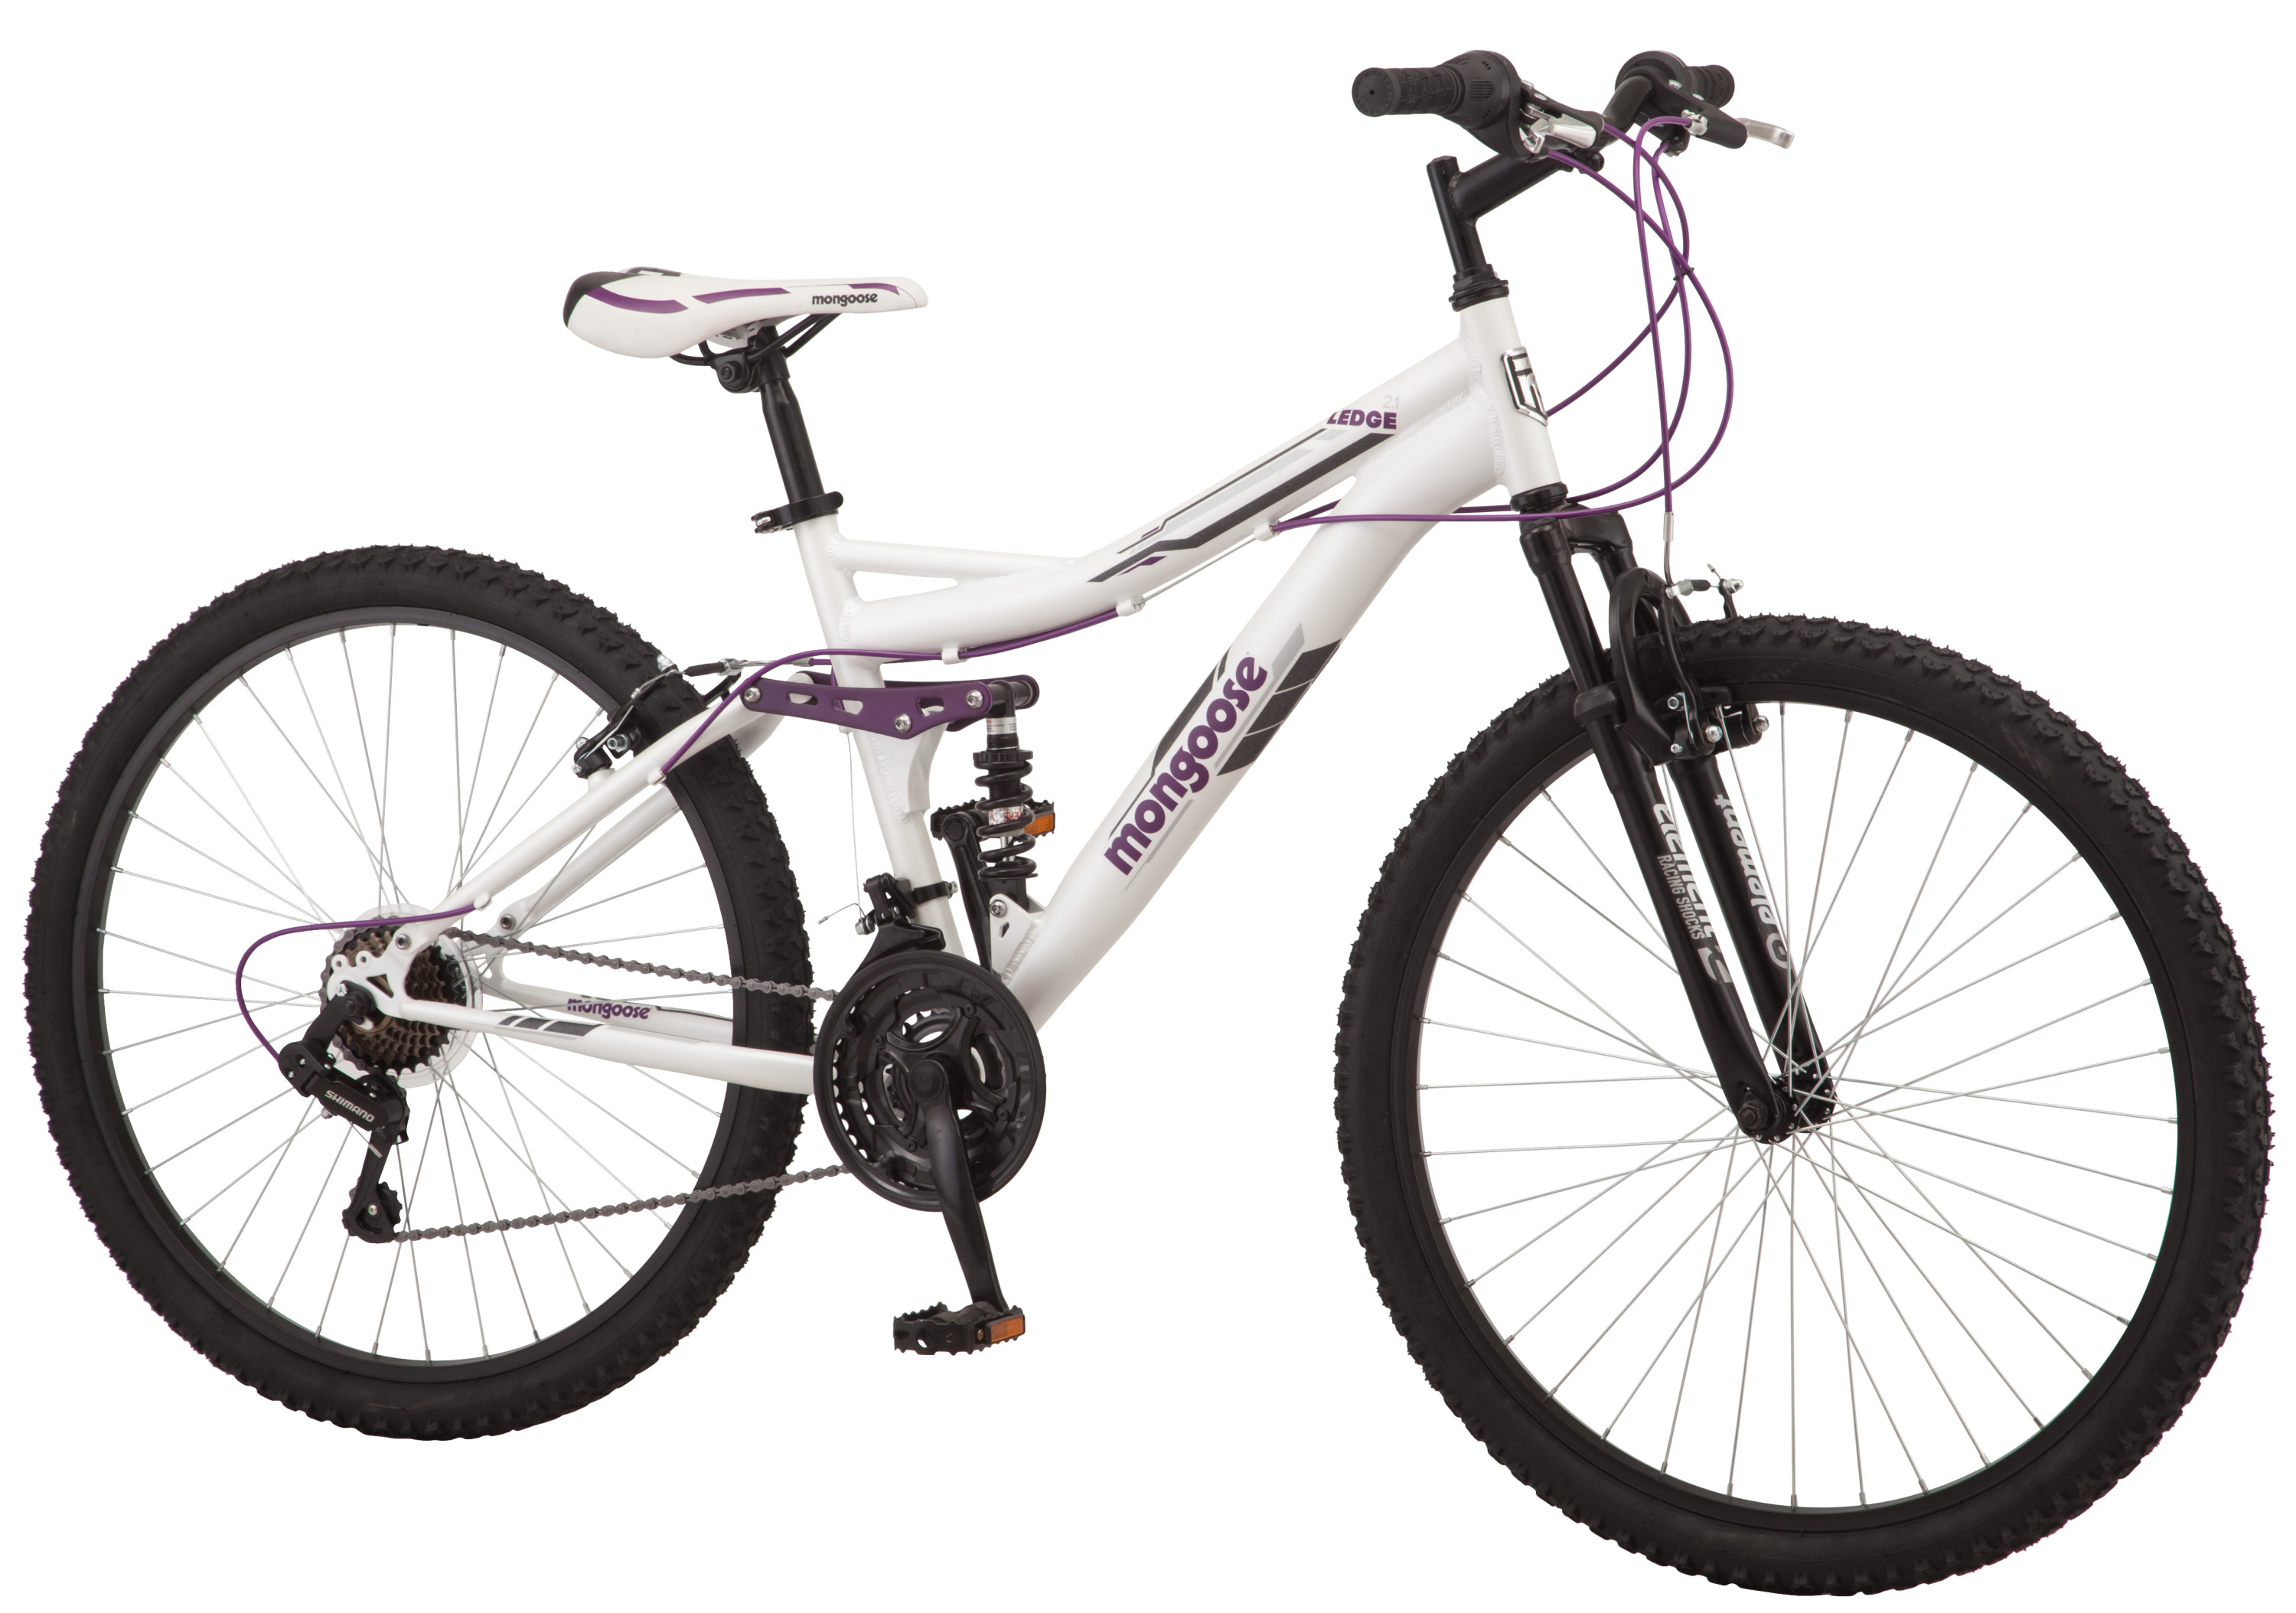 Mongoose Ledge 2.1 Mountain Bike, 26-inch wheels, 21 speeds, womens frame, white - image 5 of 7